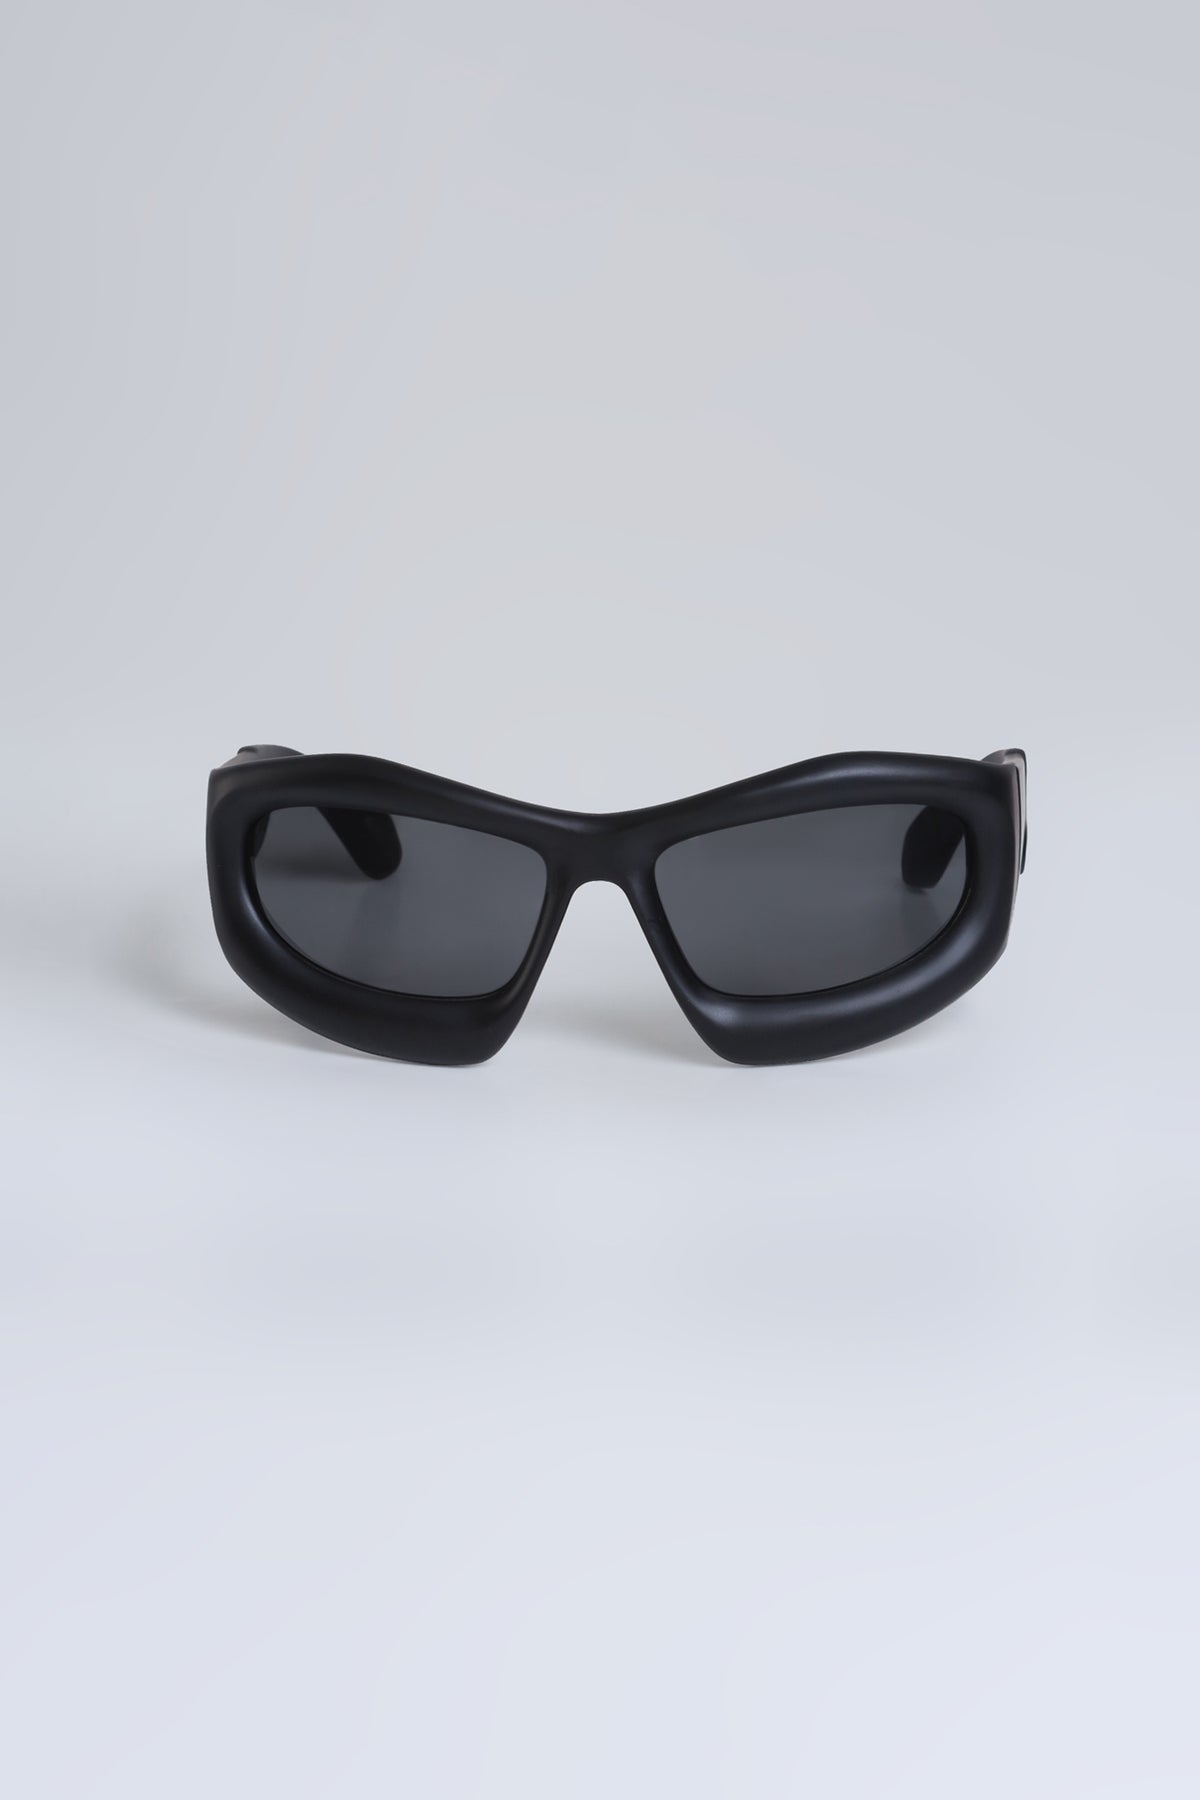 
              On Sight Oversized Bubble Sunglasses - Black - Swank A Posh
            